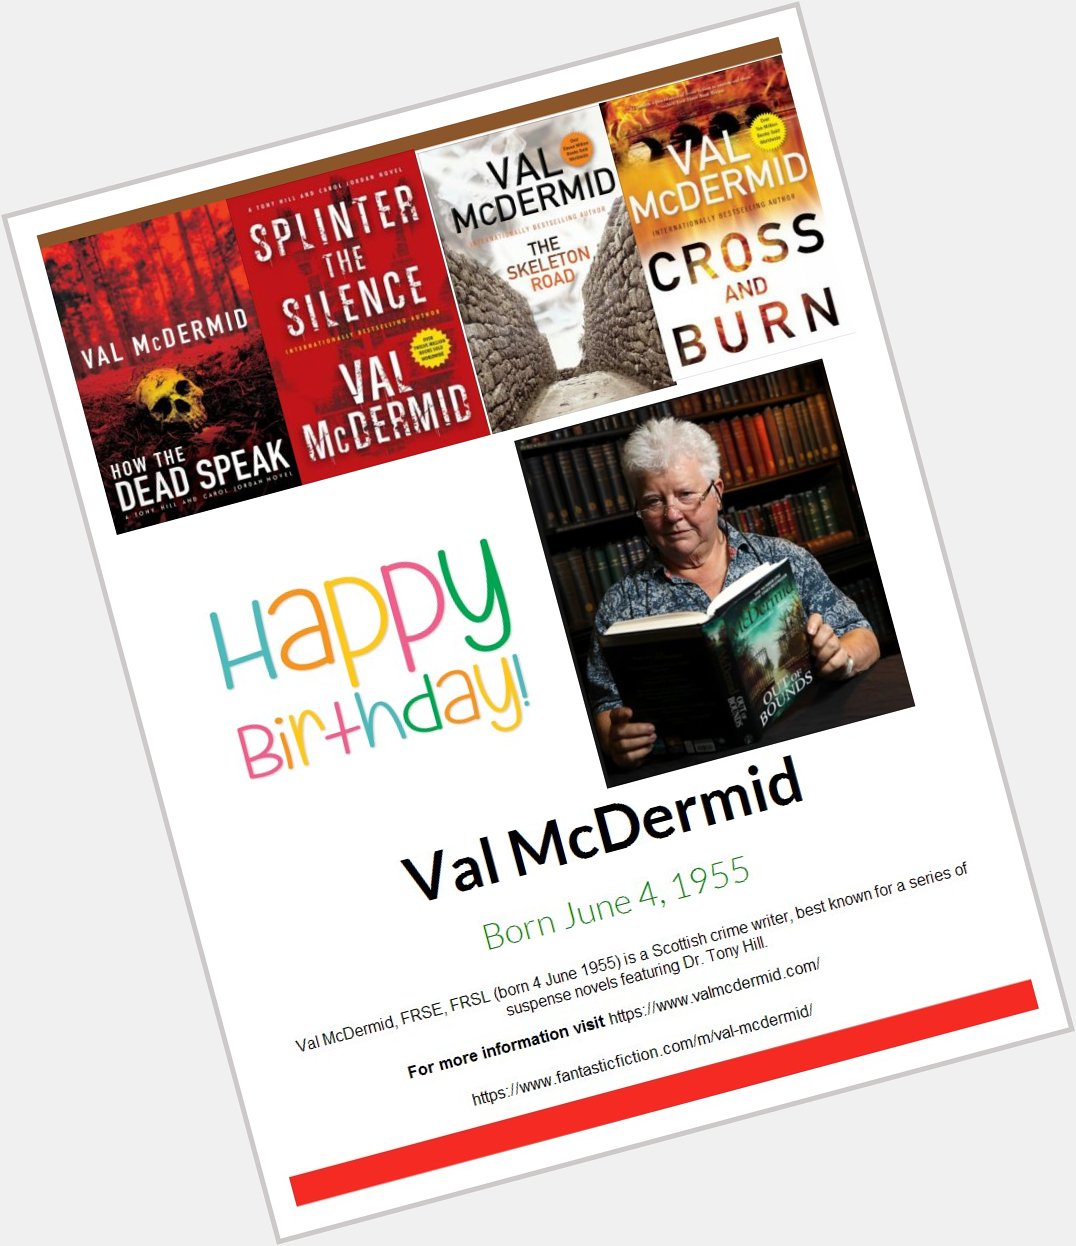 Happy Birthday Val McDermid!  